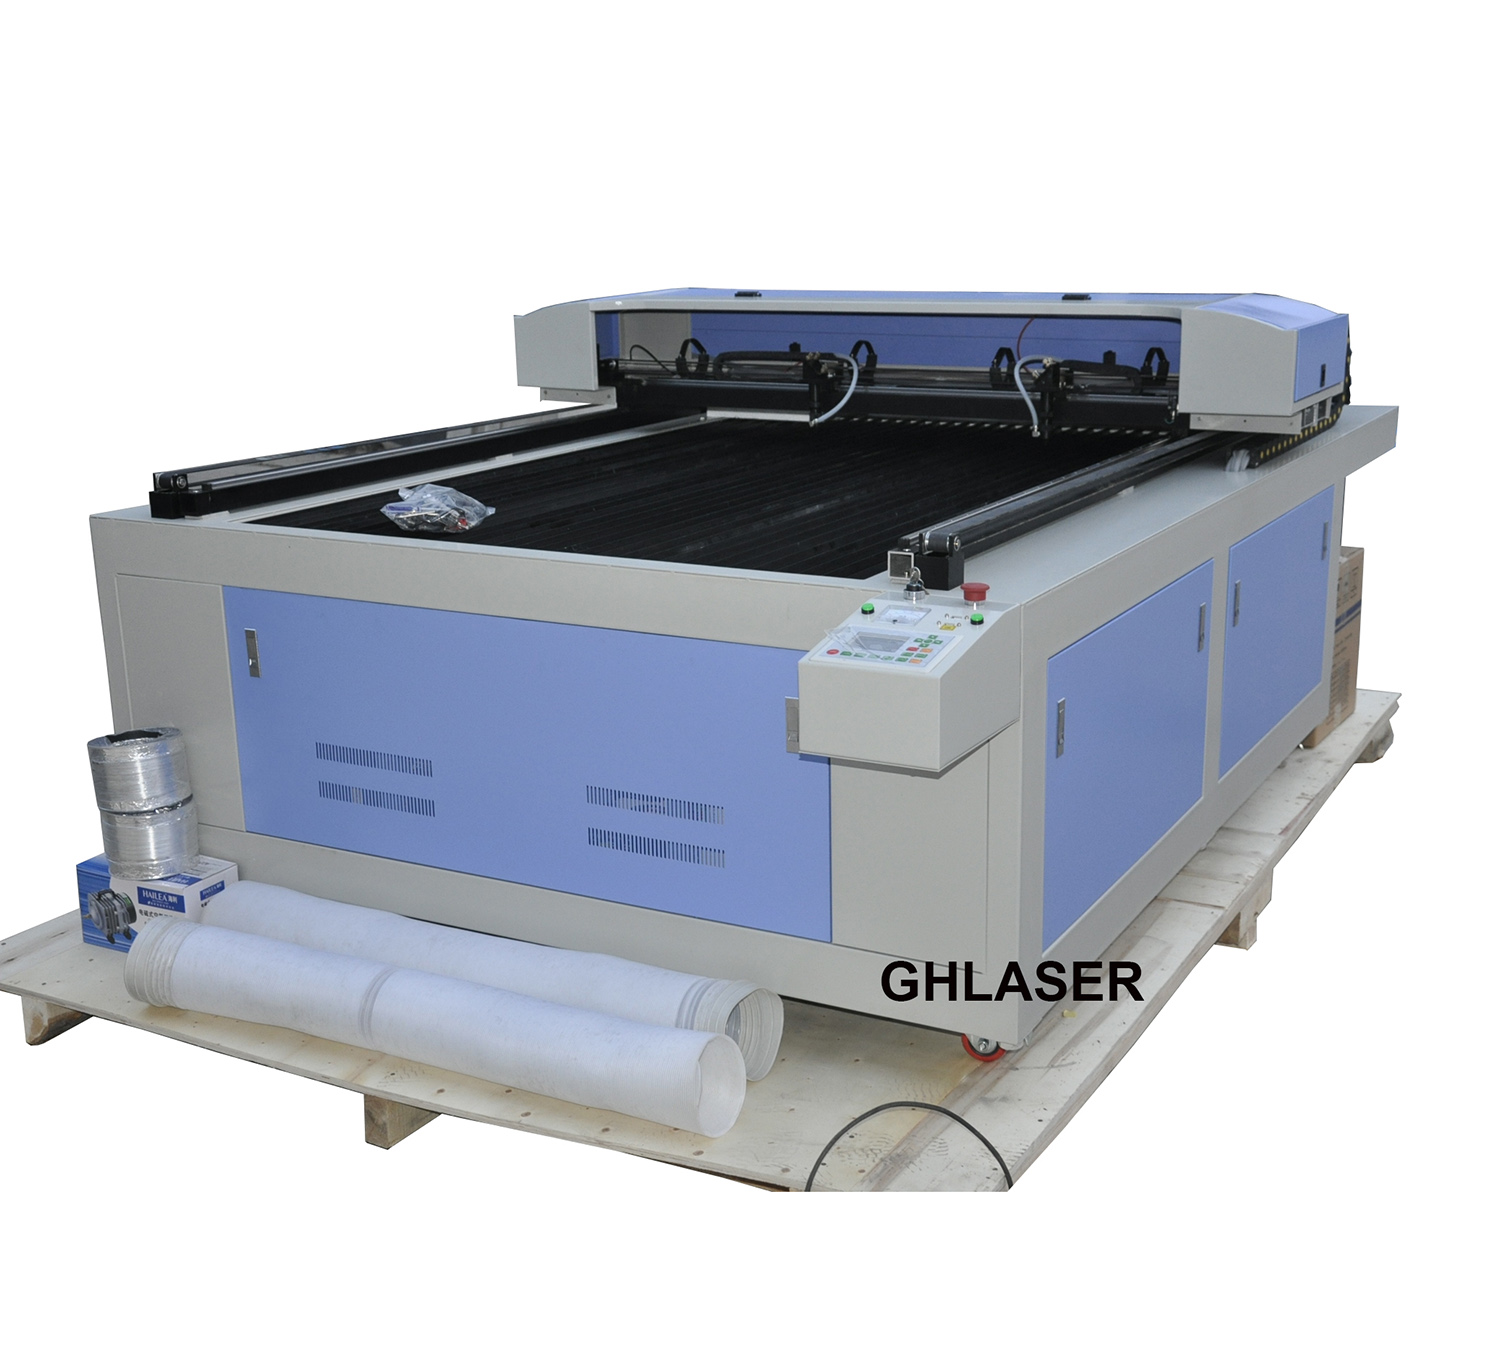 GH-1325 Laser Cutting Machine